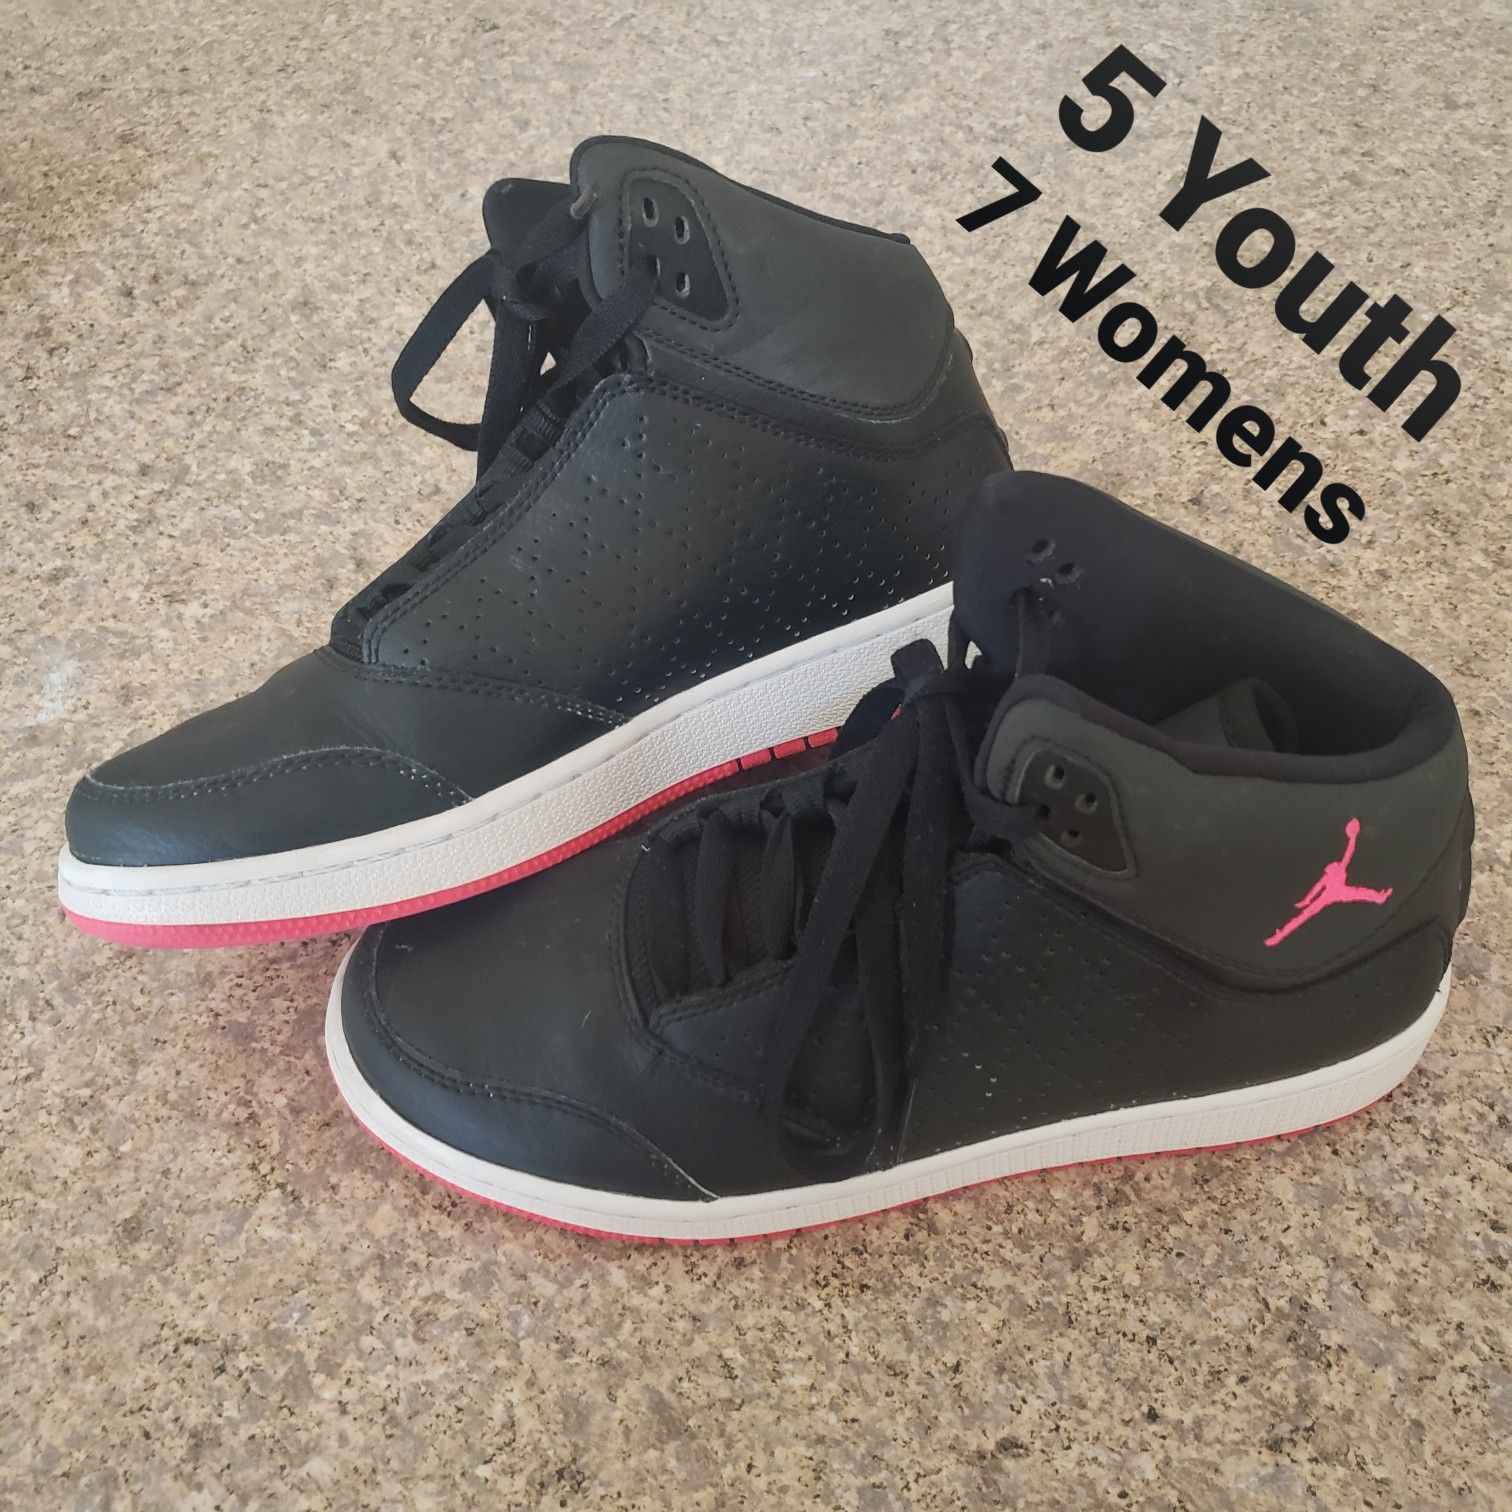 5 Youth 7 Womens Nike Jordan's Black & Hot Pink